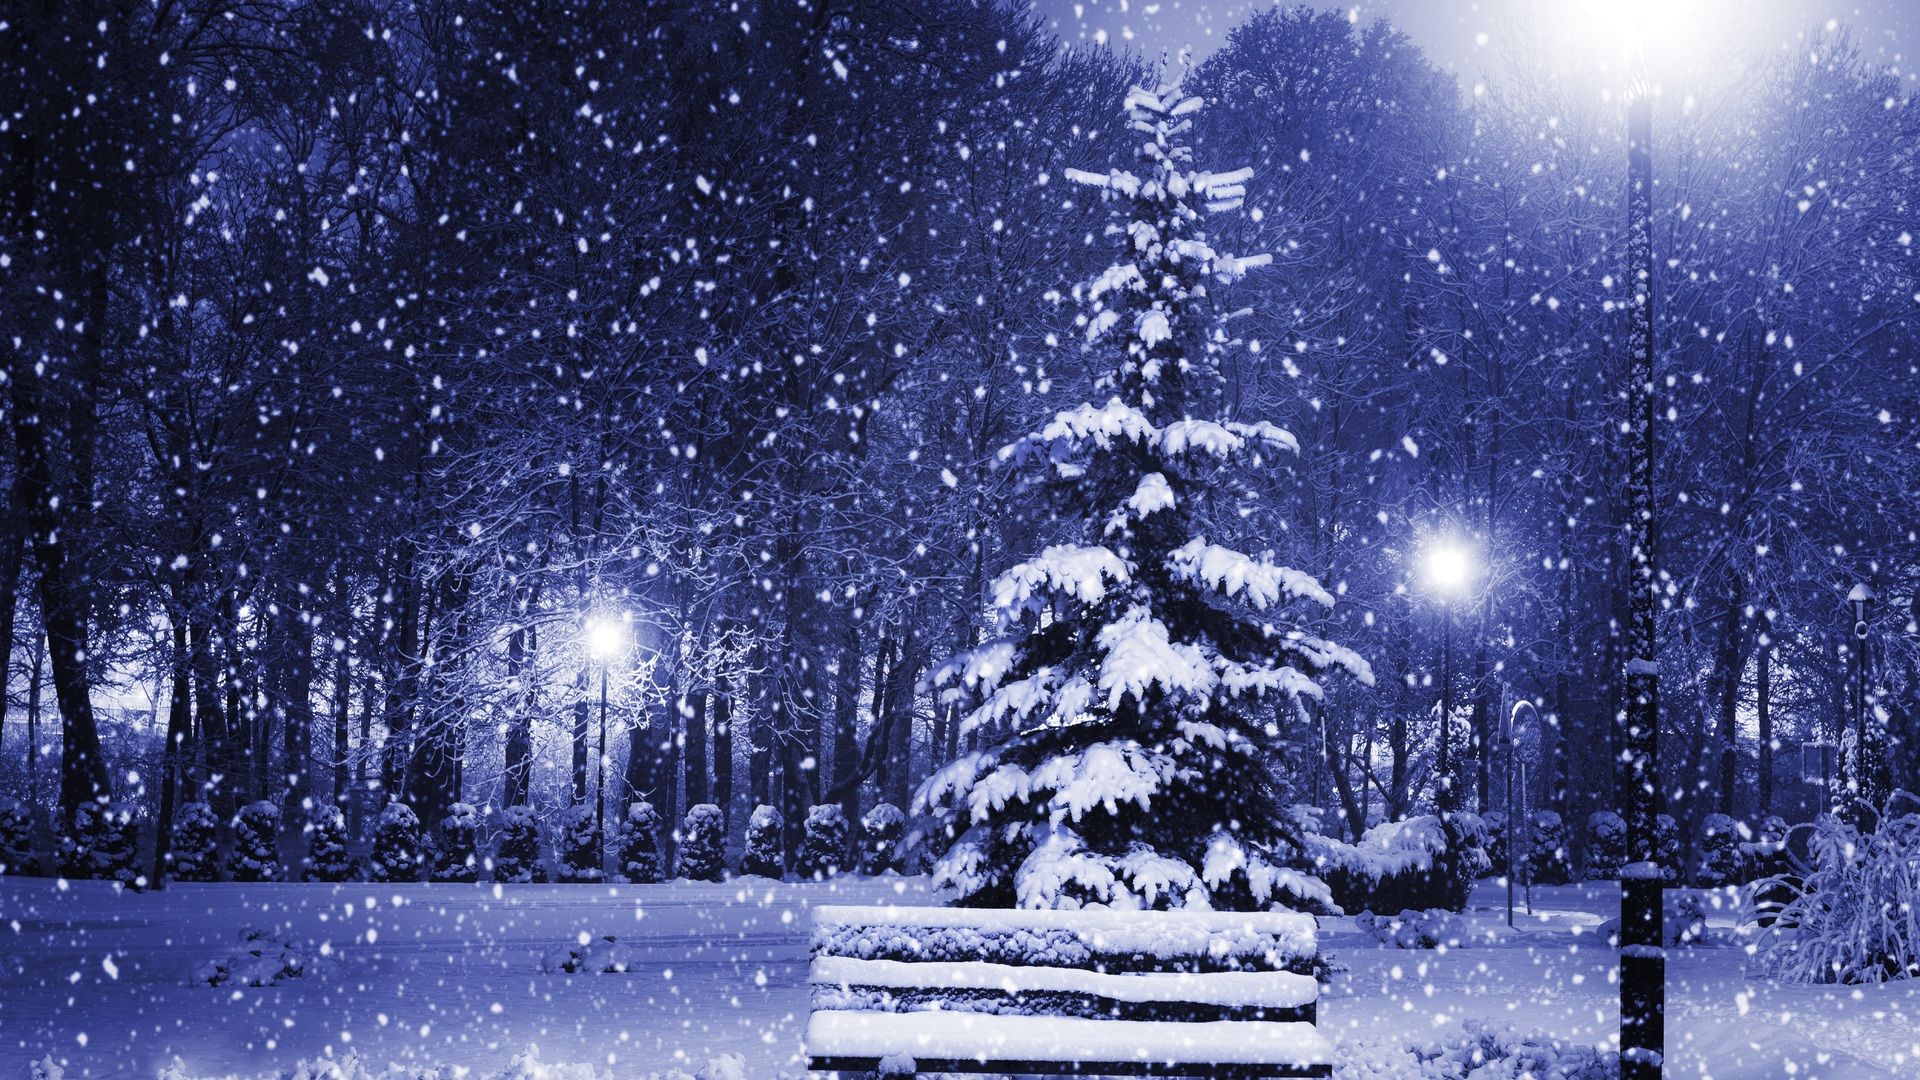 new year, snow, magic christmas night, christmas tree, town, winter, trees, nature, merry christmas desktop wallpaper 106385